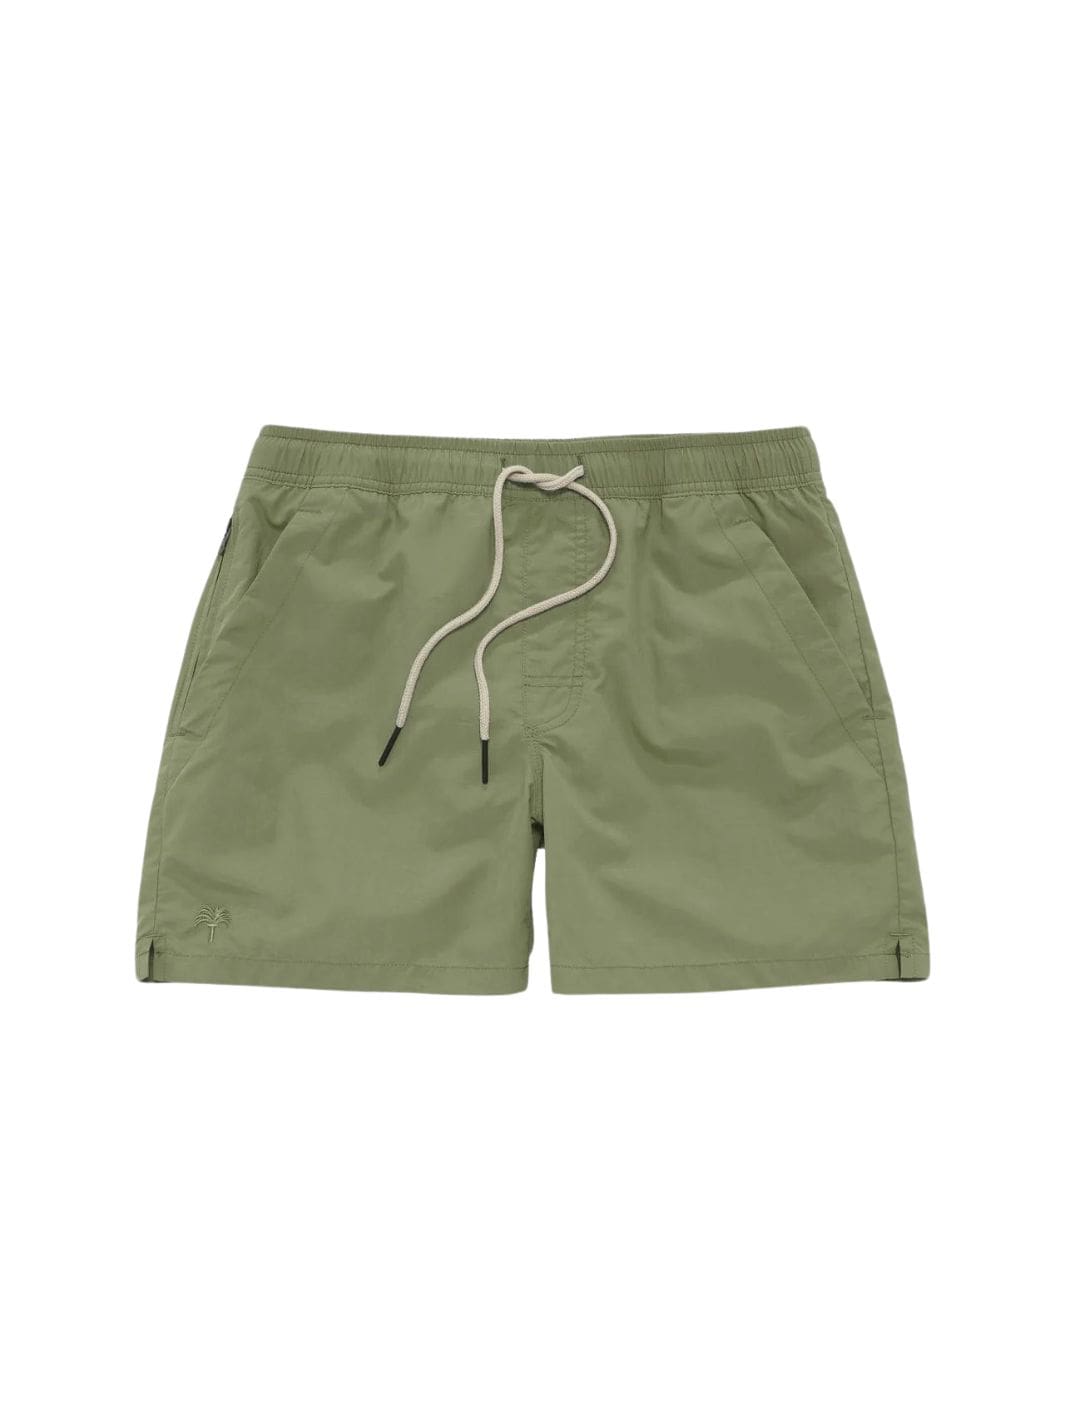 Oas Shorts Badeshorts | Nylon Swim Shorts Green